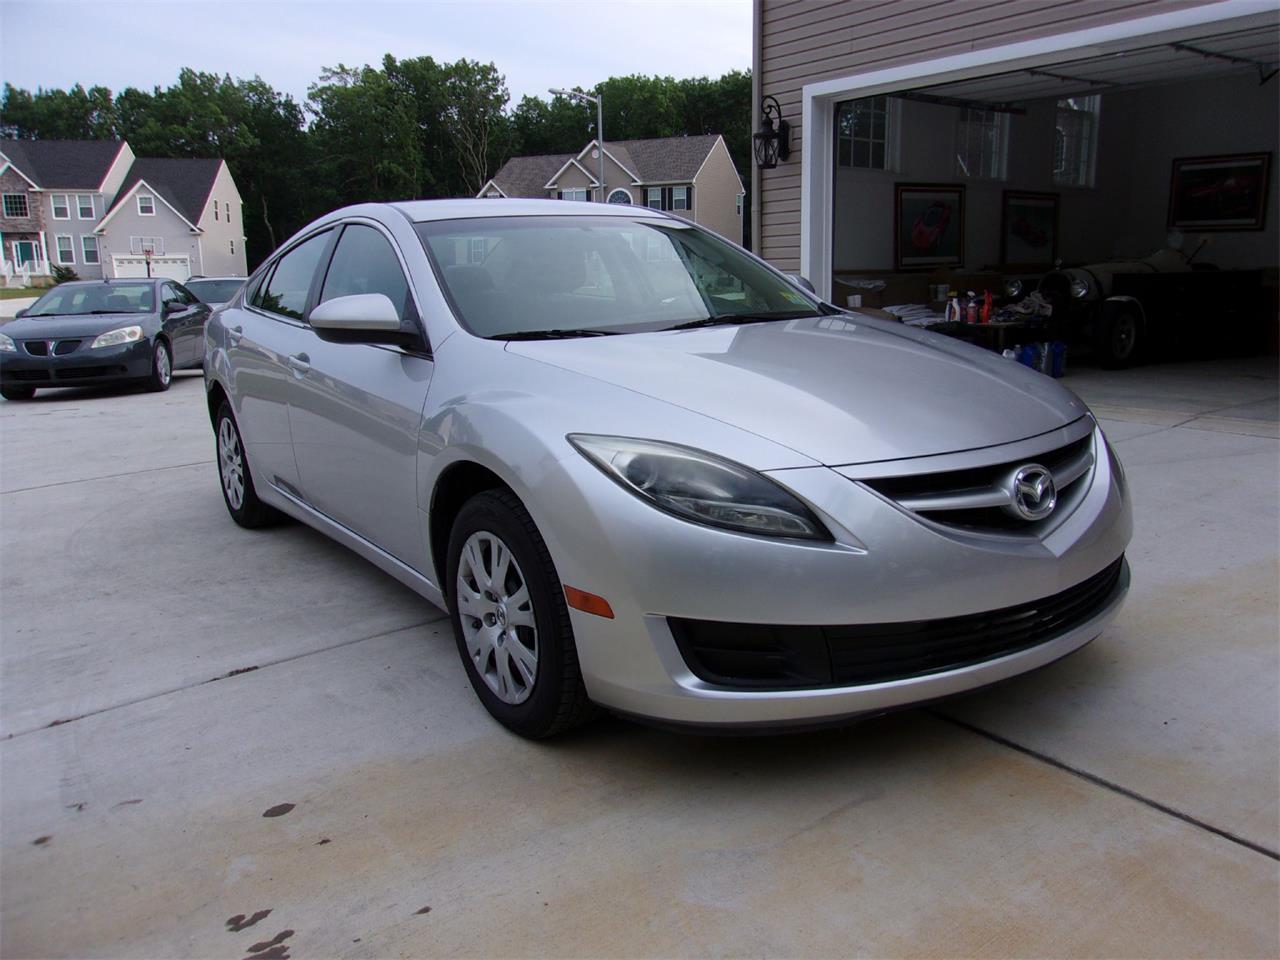 2011 Mazda Mazda6 for Sale | ClassicCars.com | CC-1136534